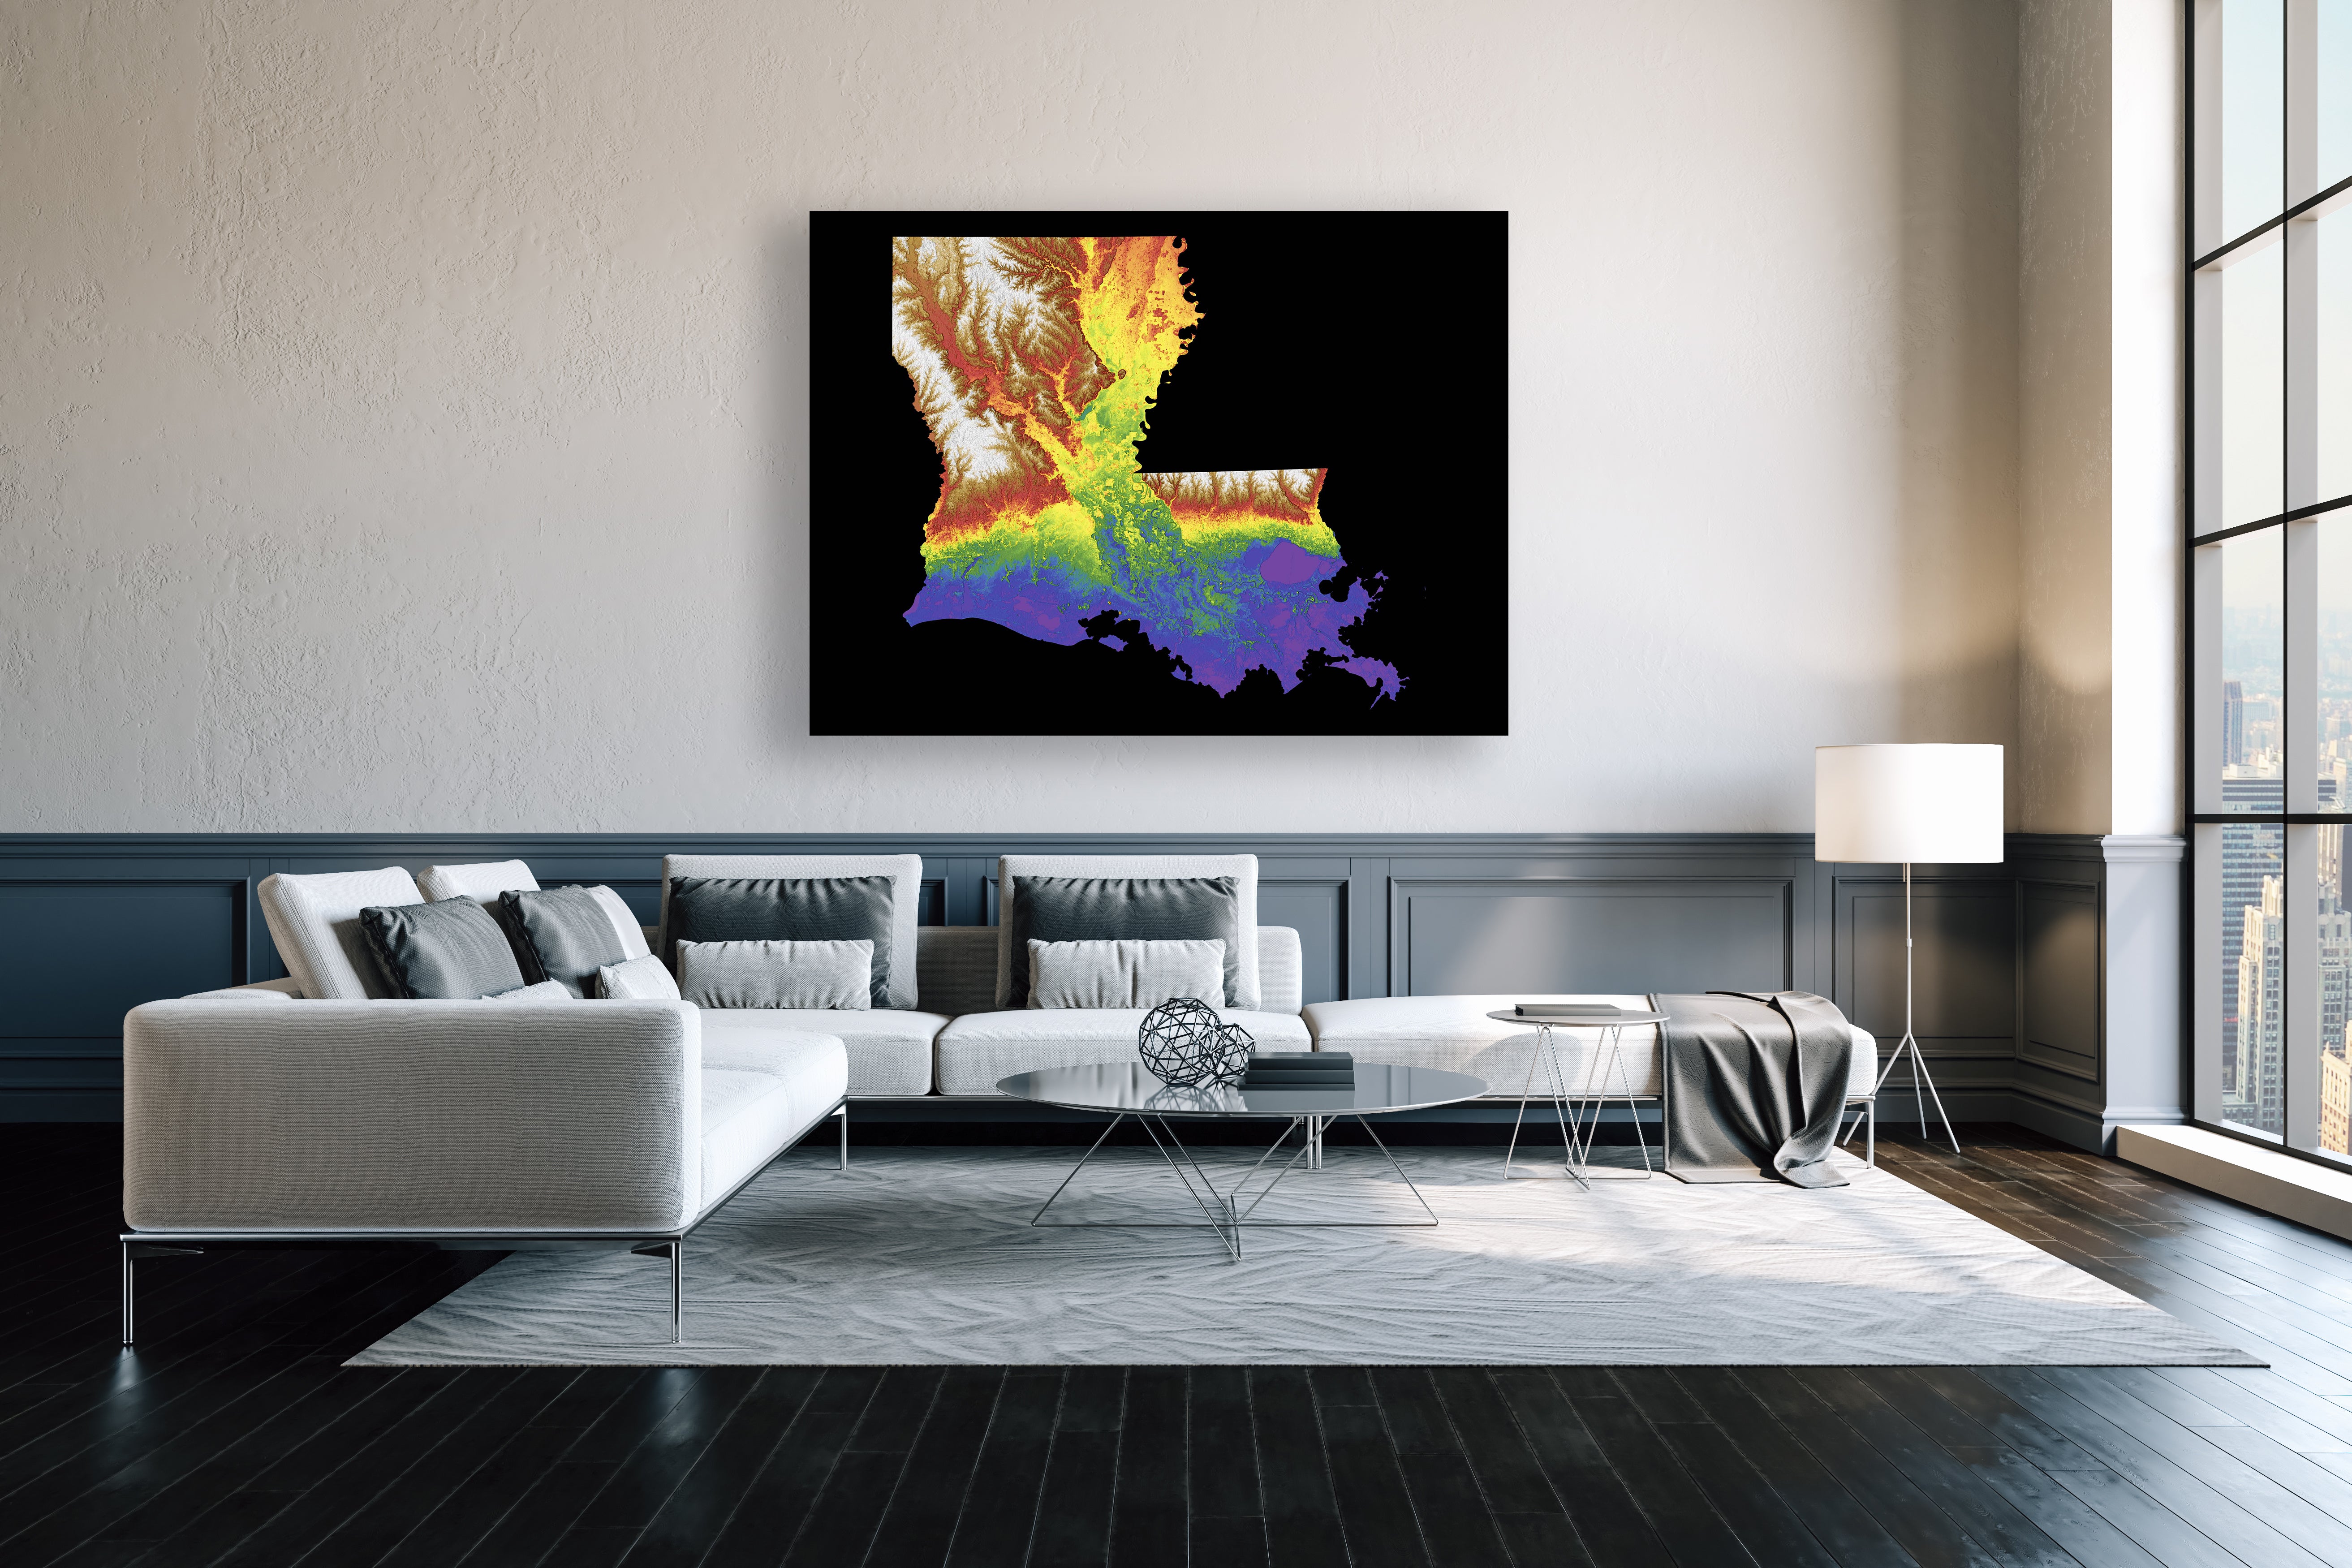 Louisiana Color Elevation Map